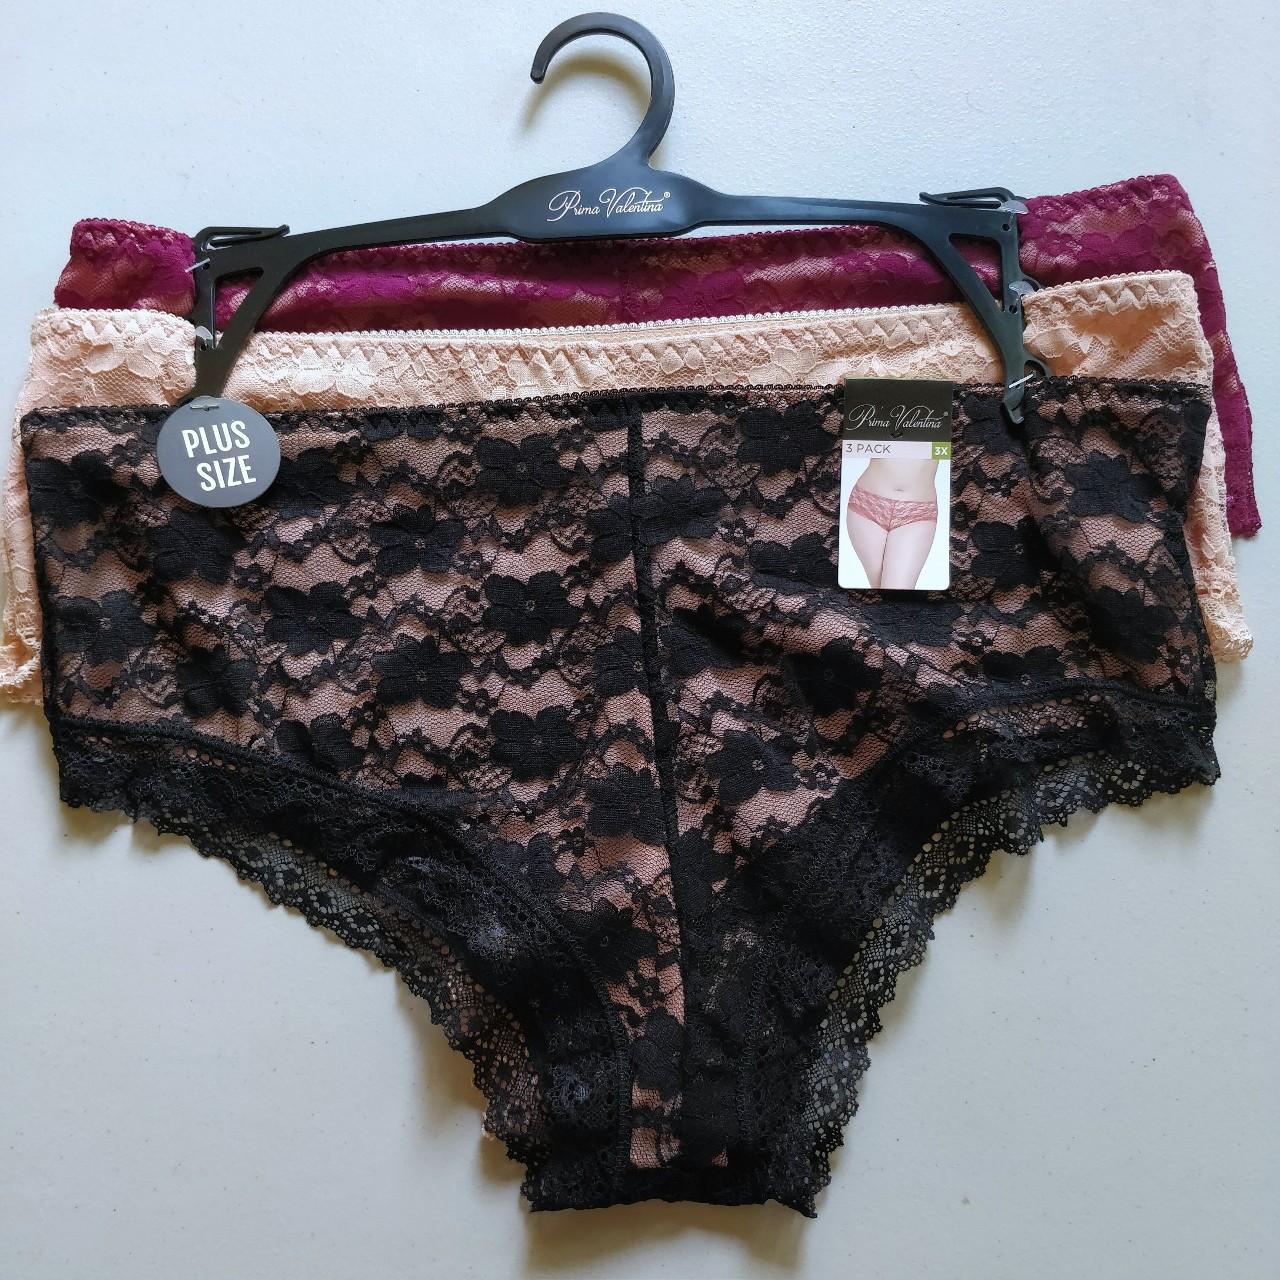 bebe NWT Rhinestone Bikini Panty 3-Pack Underwear - Depop